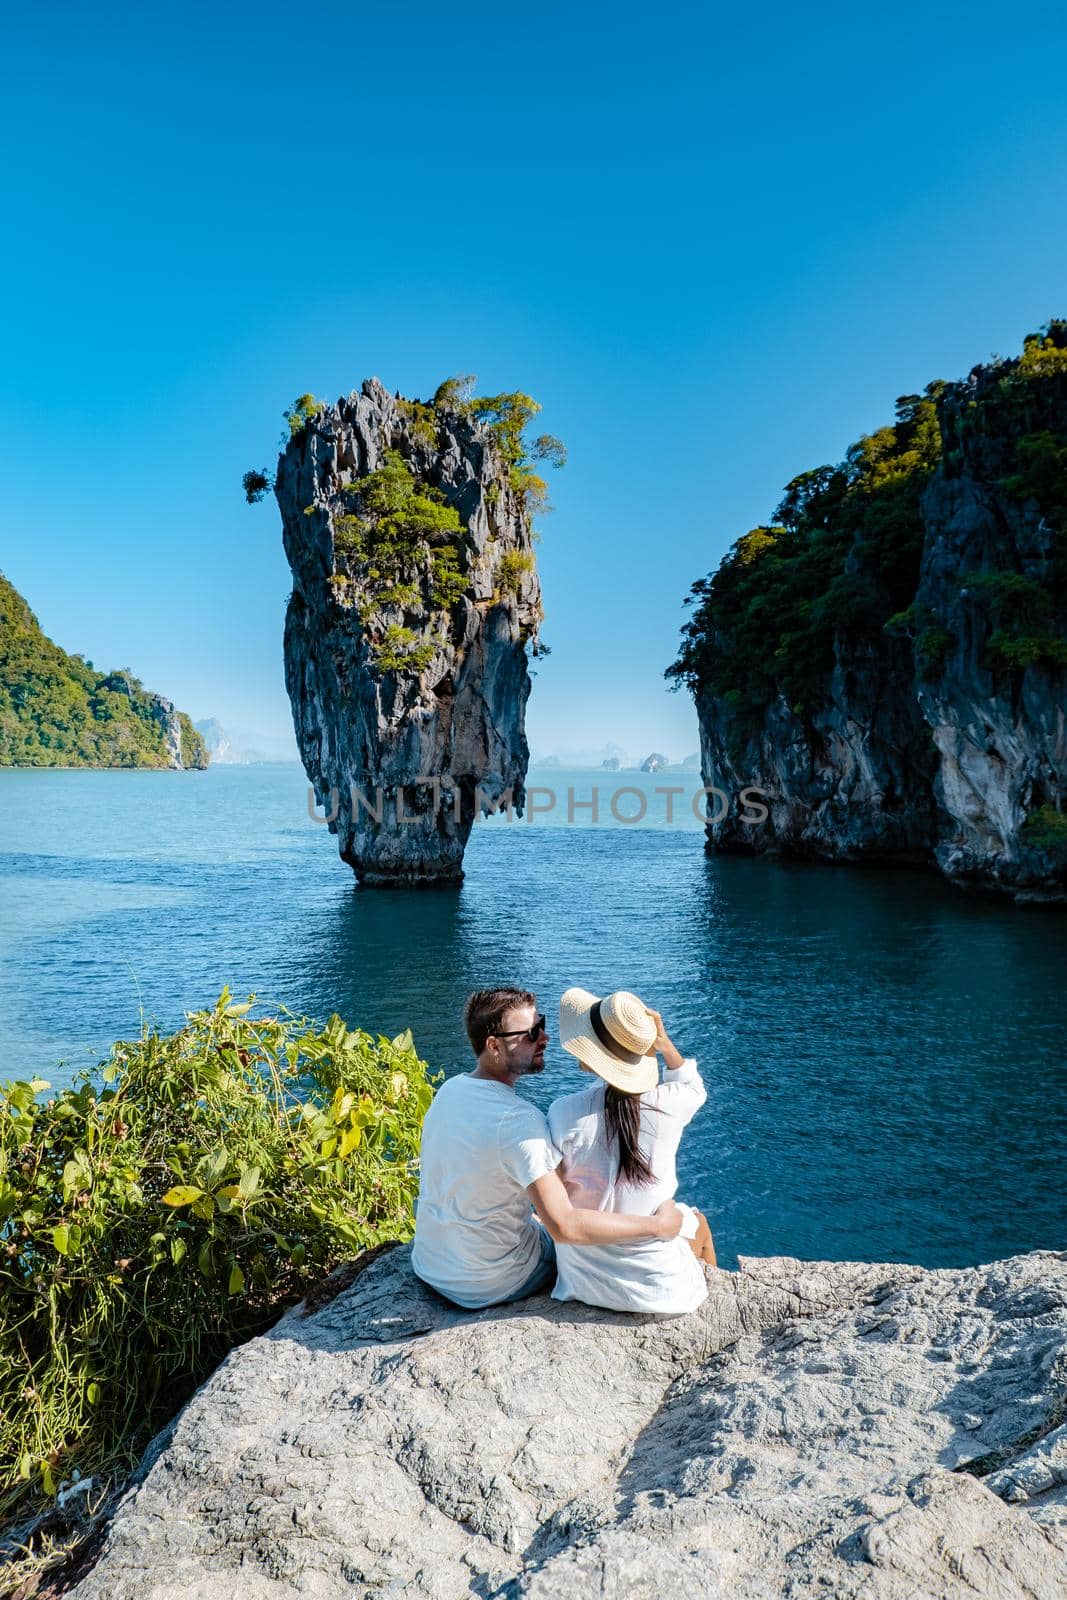 James Bond island near Phuket in Thailand. Famous landmark and famous travel destination, couple men and woman mid age visititng James Bond island in Krabi Thailand by fokkebok